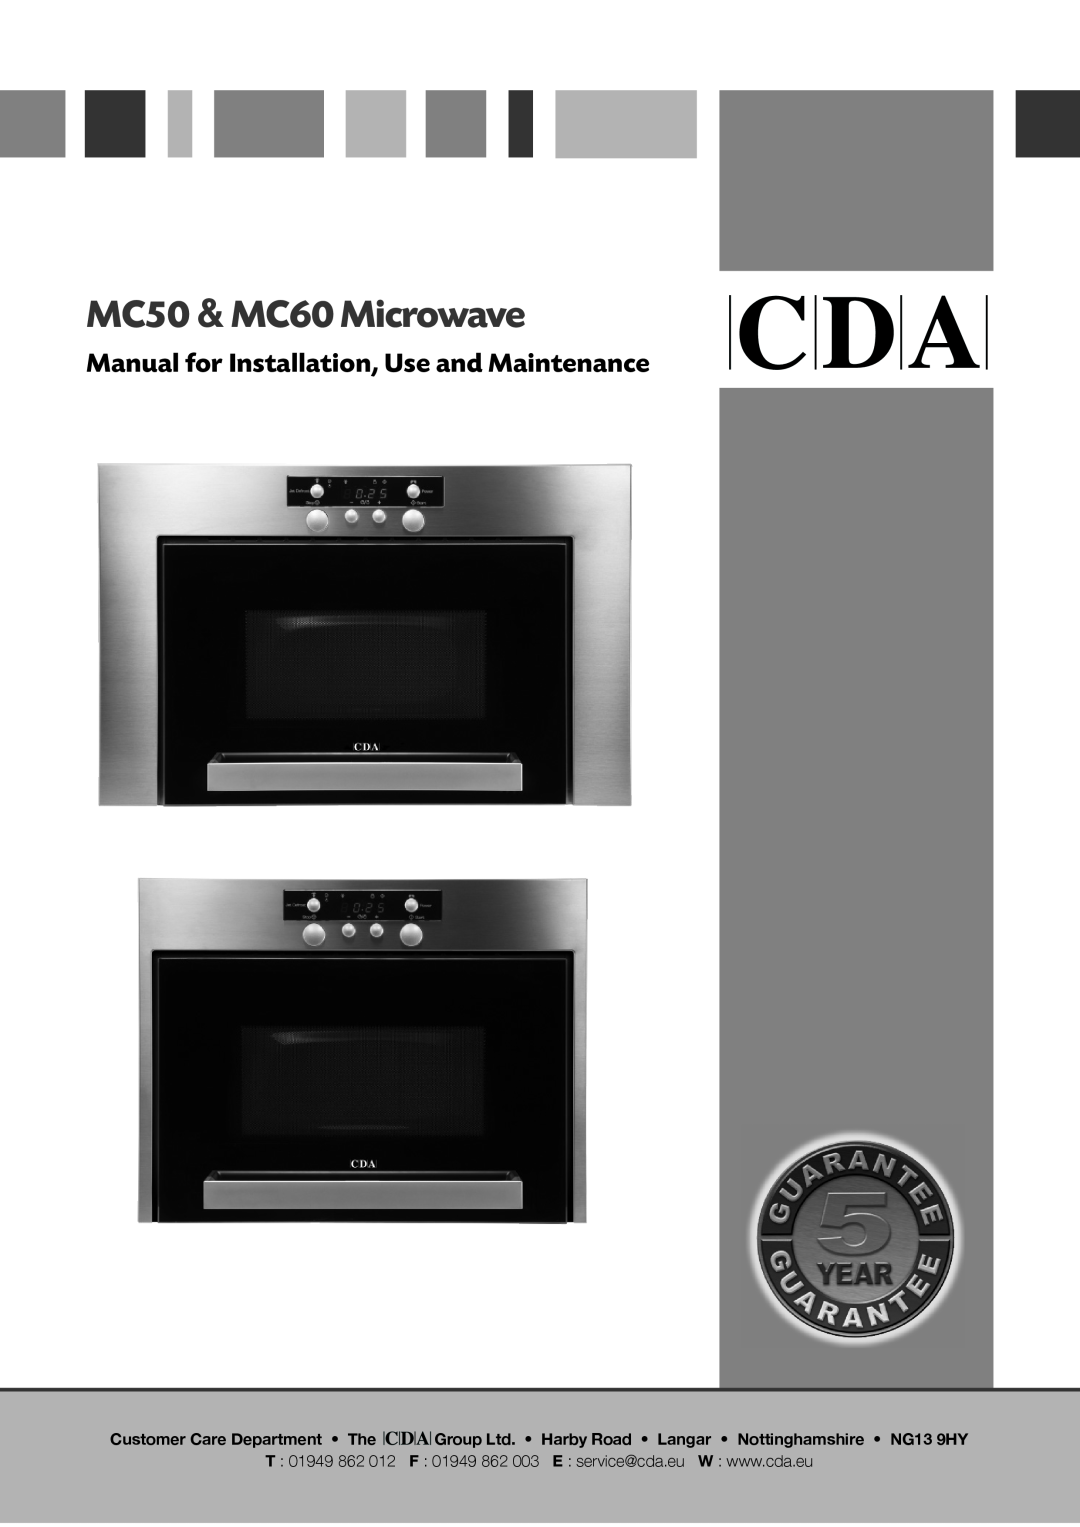 CDA manual MC50 & MC60 Microwave, Manual for Installation, Use and Maintenance 